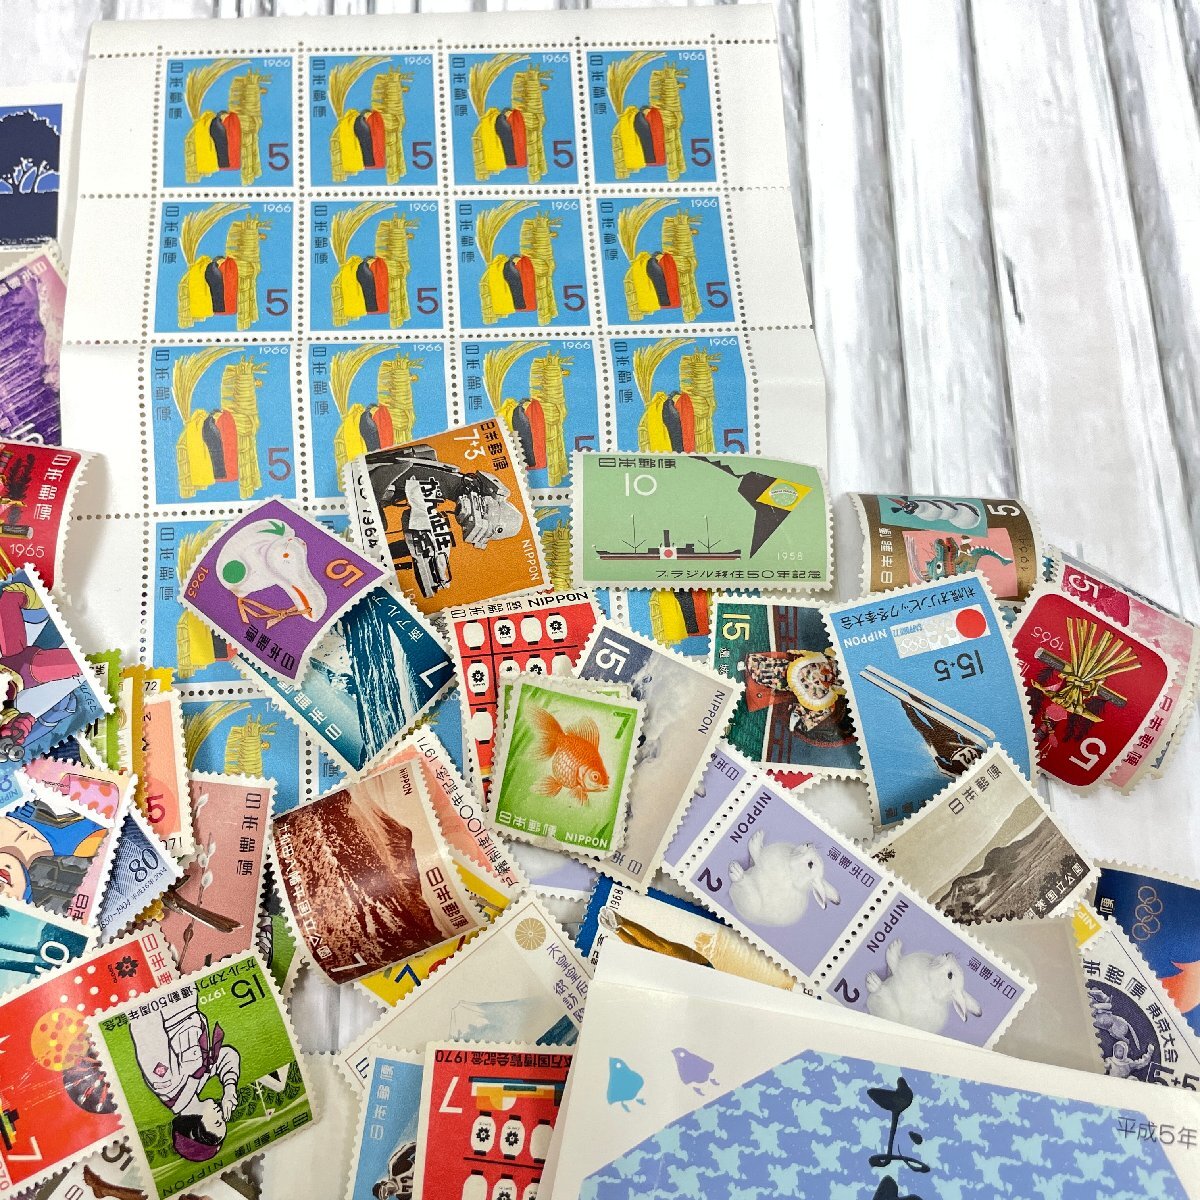 m002 H8 1 送料無料 未使用 バラ 切手 1万円分 額面10,000円分 まとめて 日本切手 郵便 記念切手の画像3